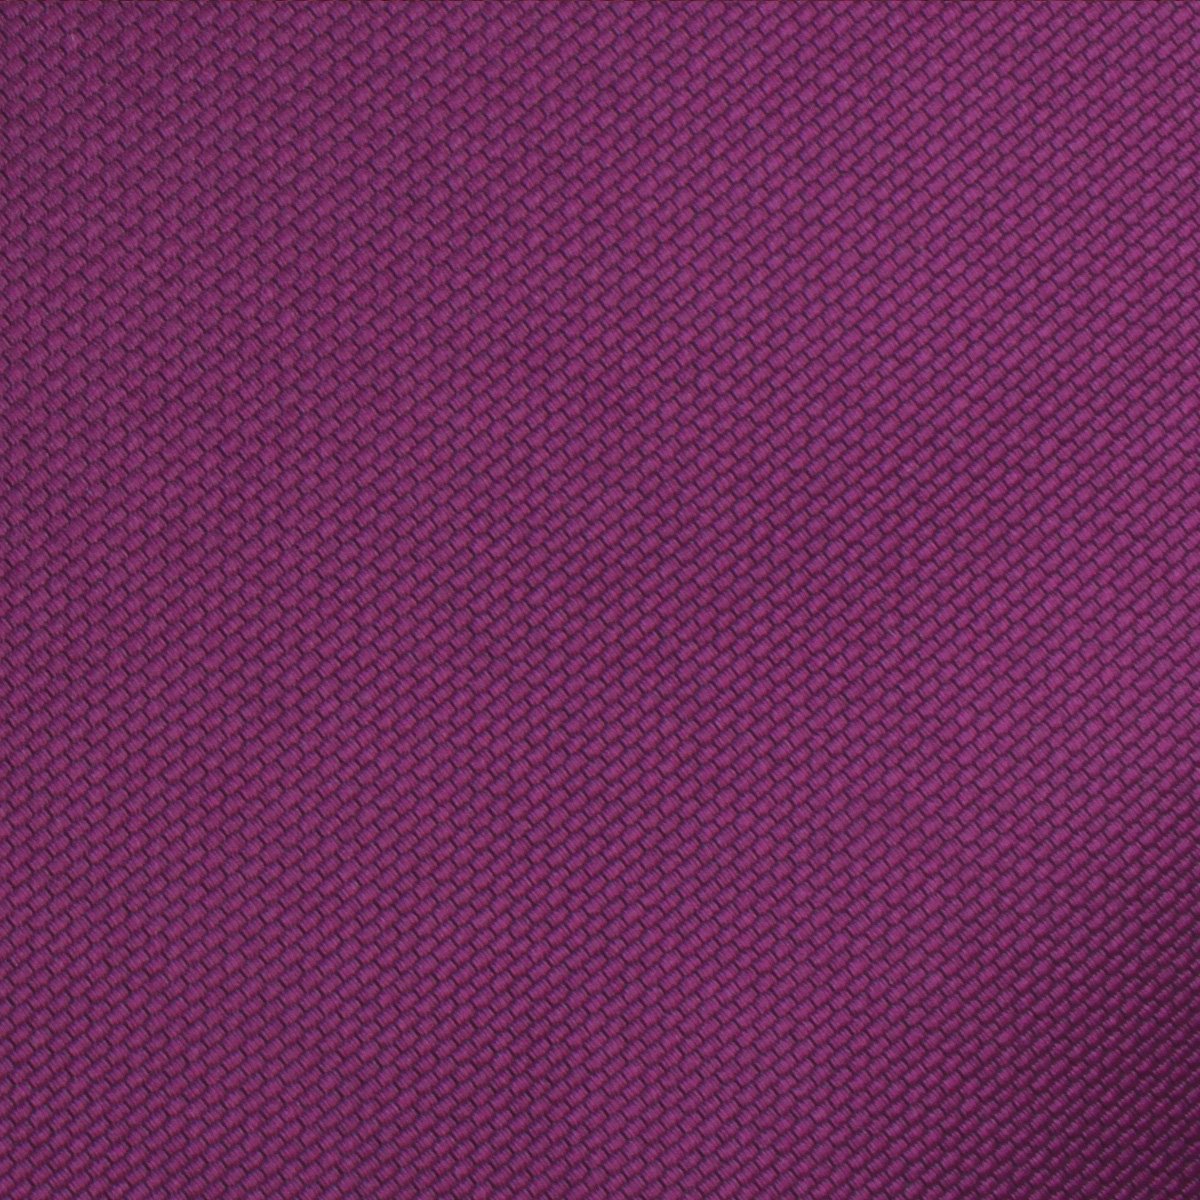 Sangria Purple Weave Necktie Fabric